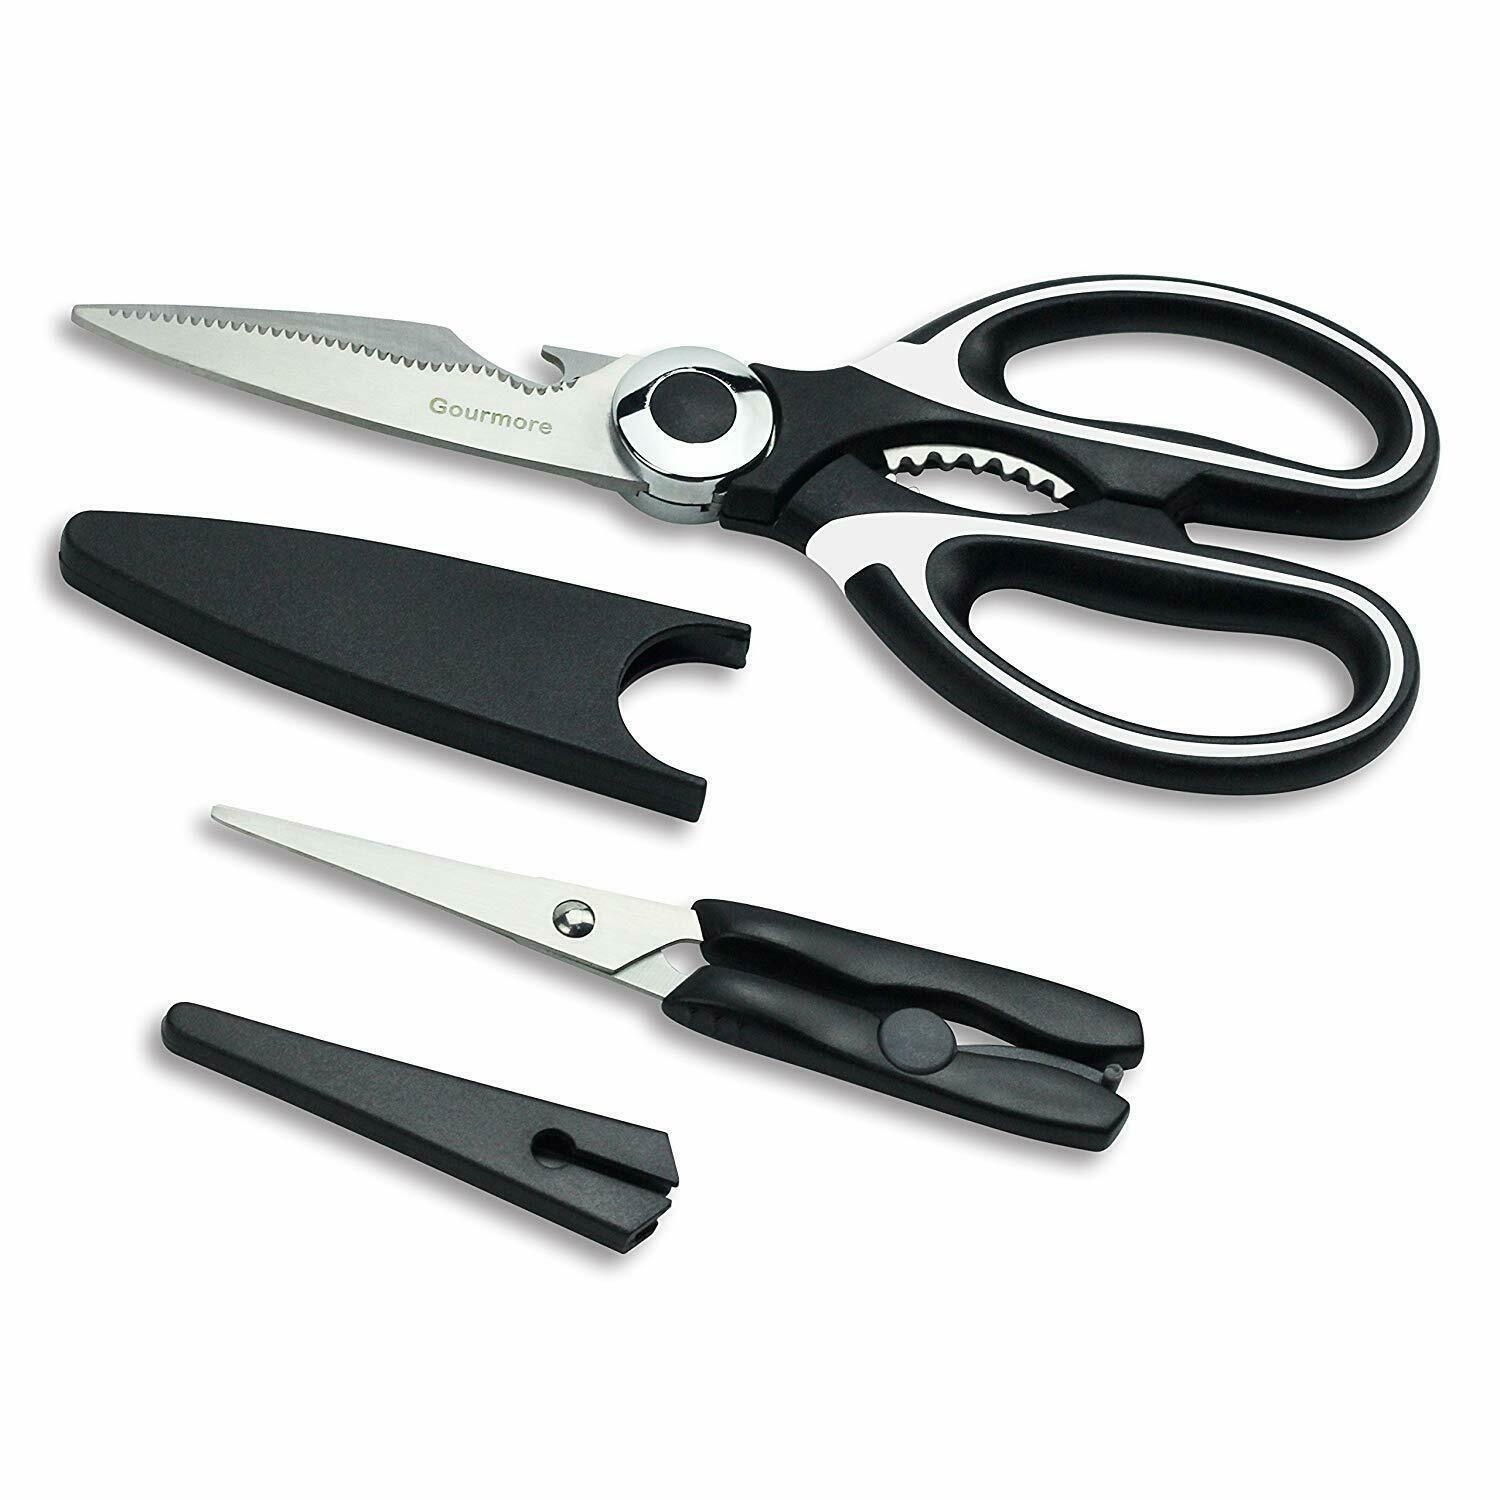 Goumore Kitchen Scissor Ultra Sharp Stainless Steel Heavy Duty, Poultry Shears